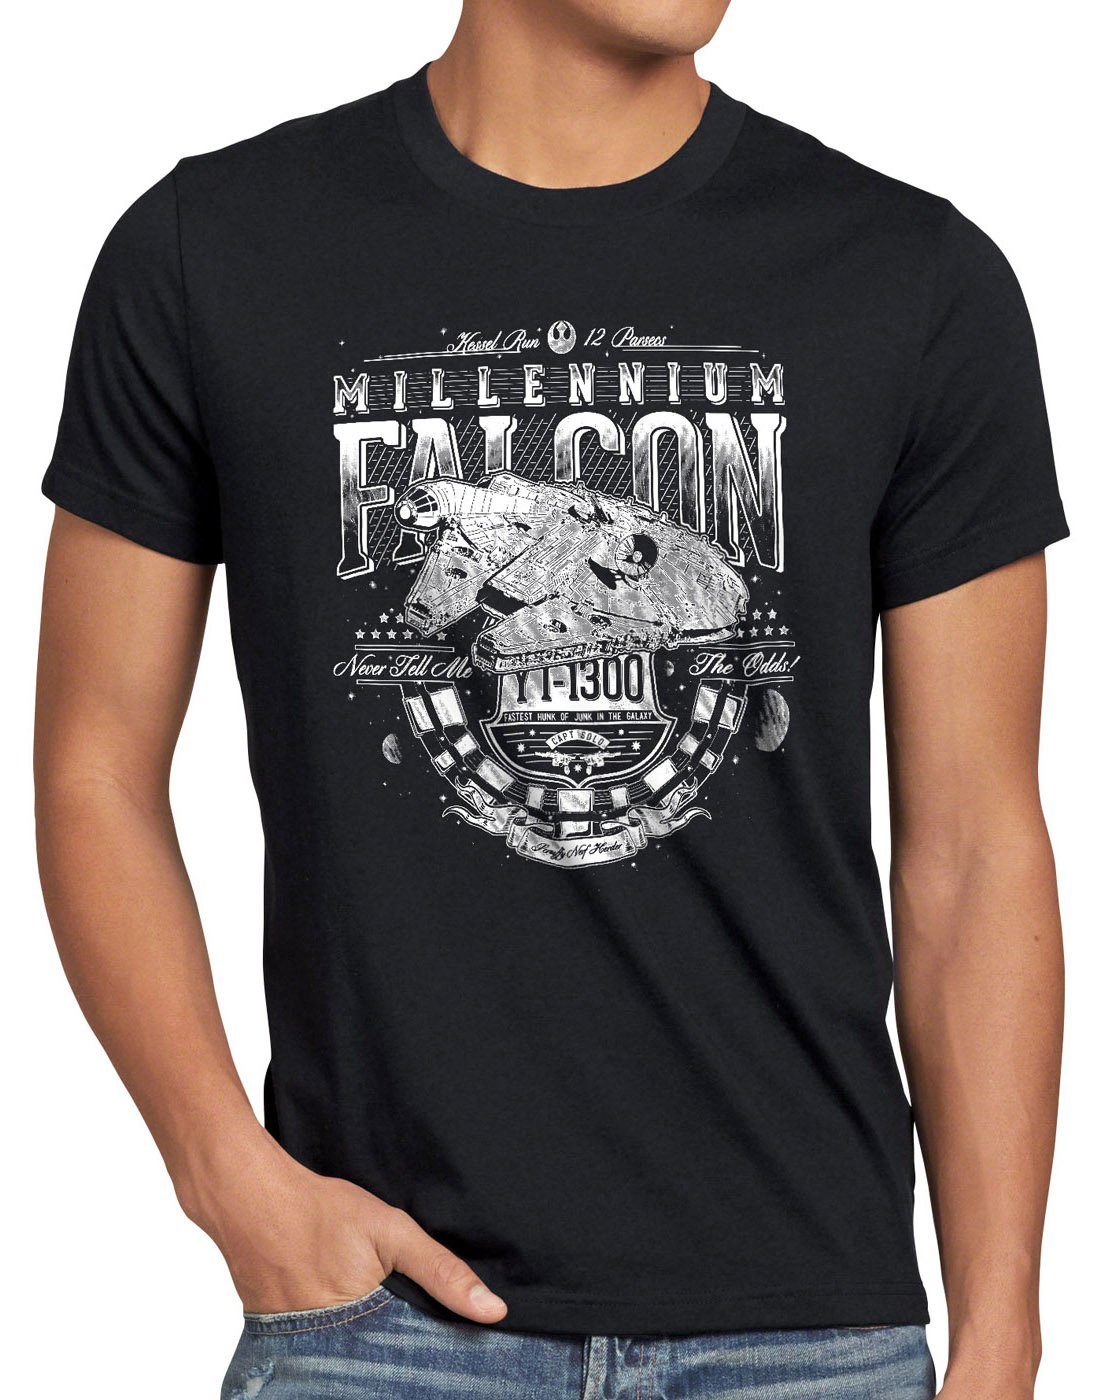 style3 Print-Shirt Herren T-Shirt rasender falke Parsec falke schwarz millenium 12 sprung Kossal-Flug